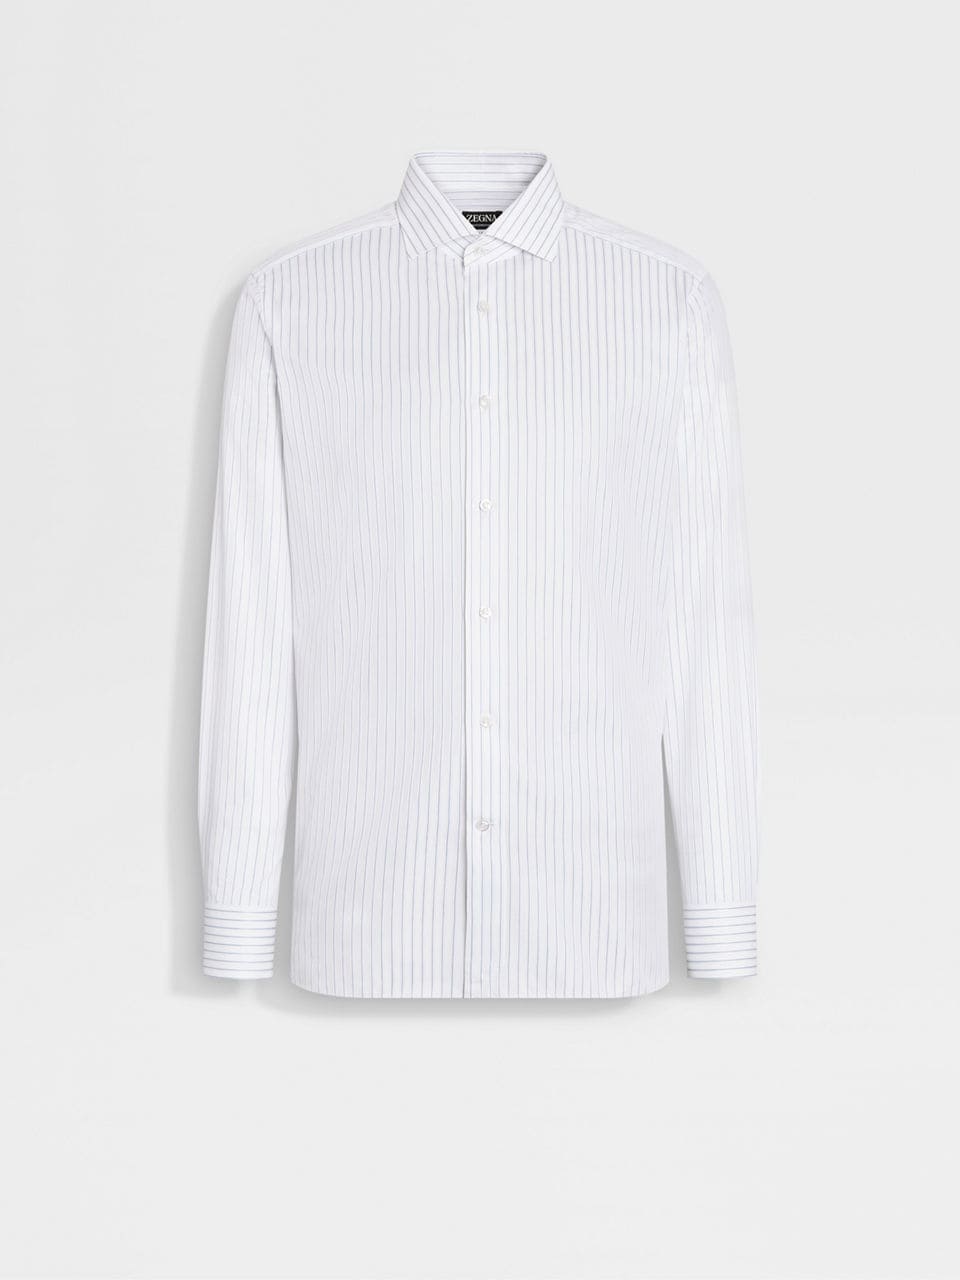 Zegna panelled evening shirt - White